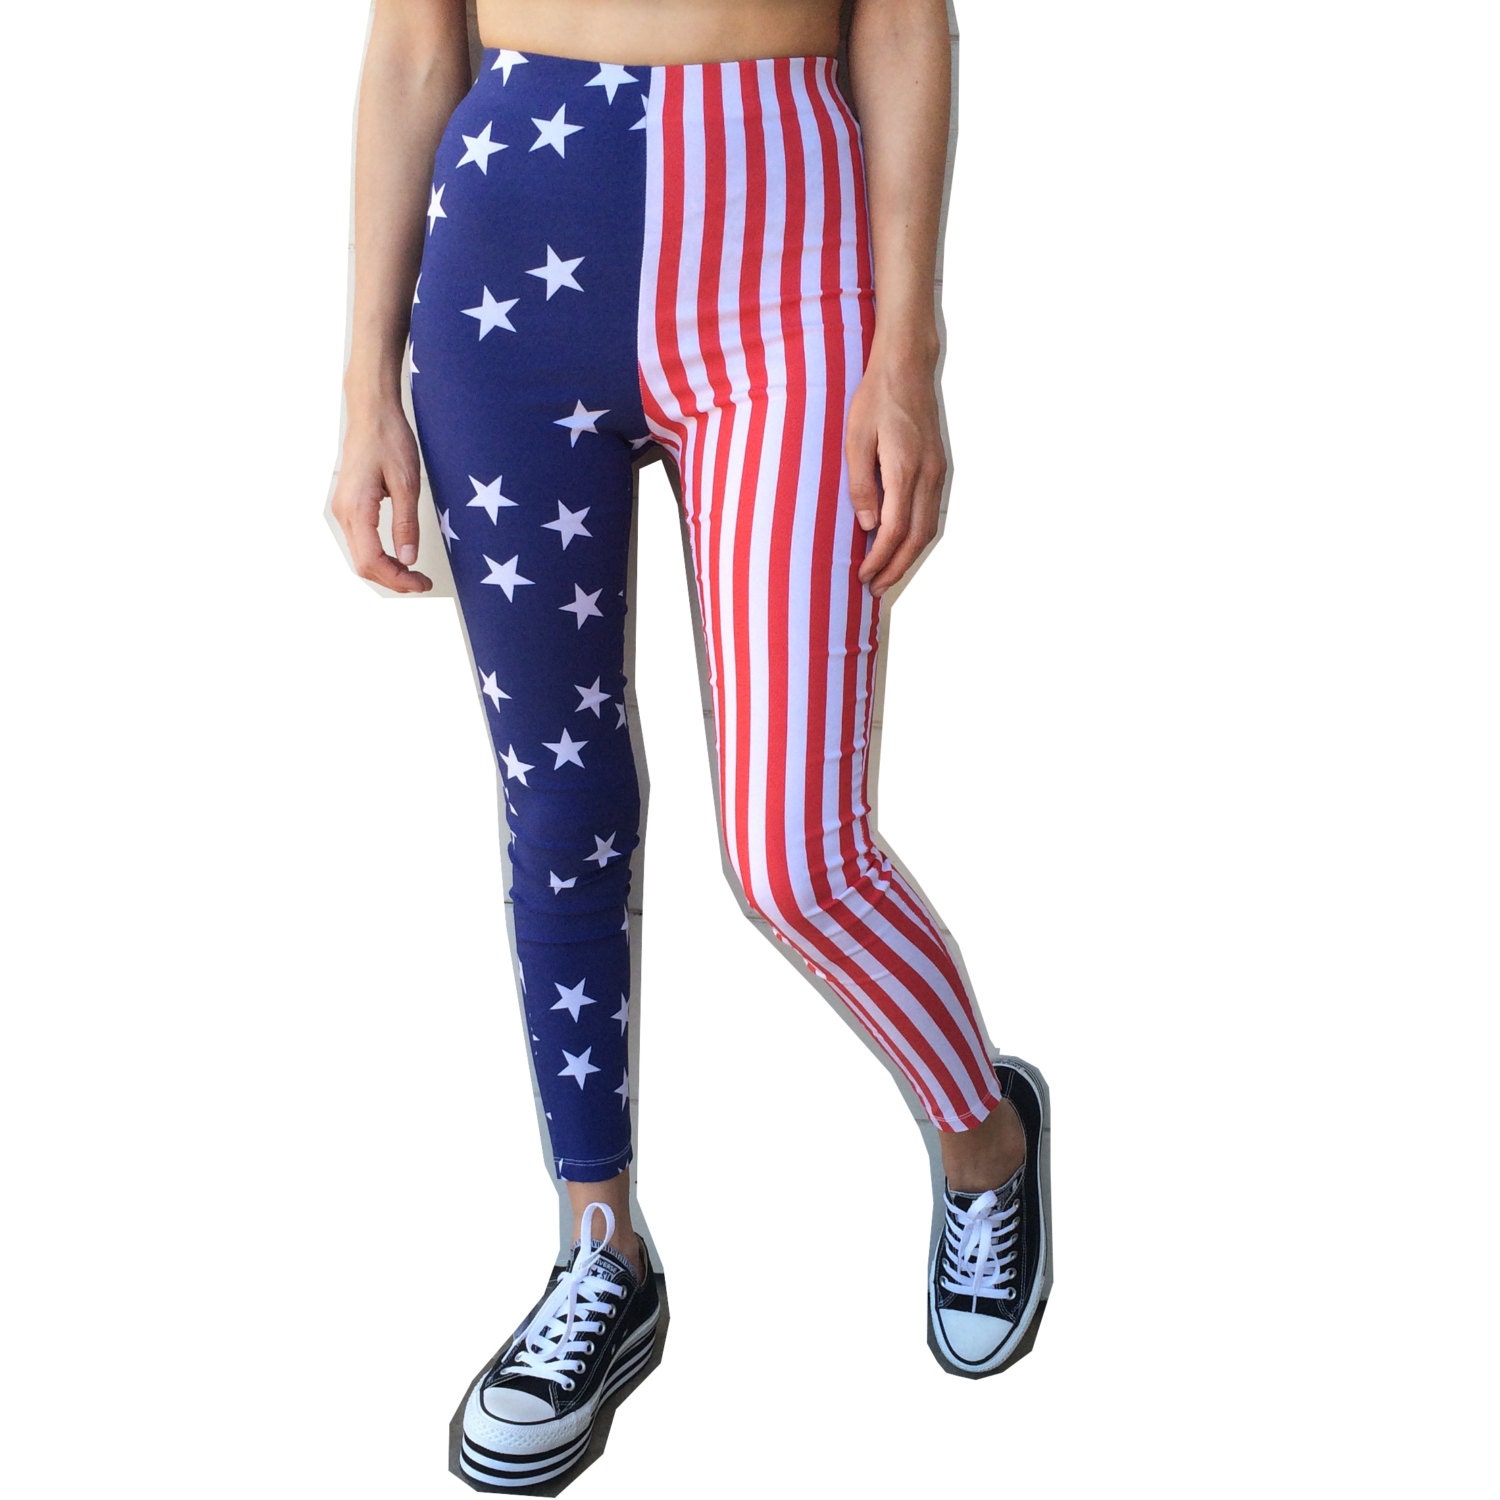 USA Tights / America Leggings / American Flag by WeekendCloset